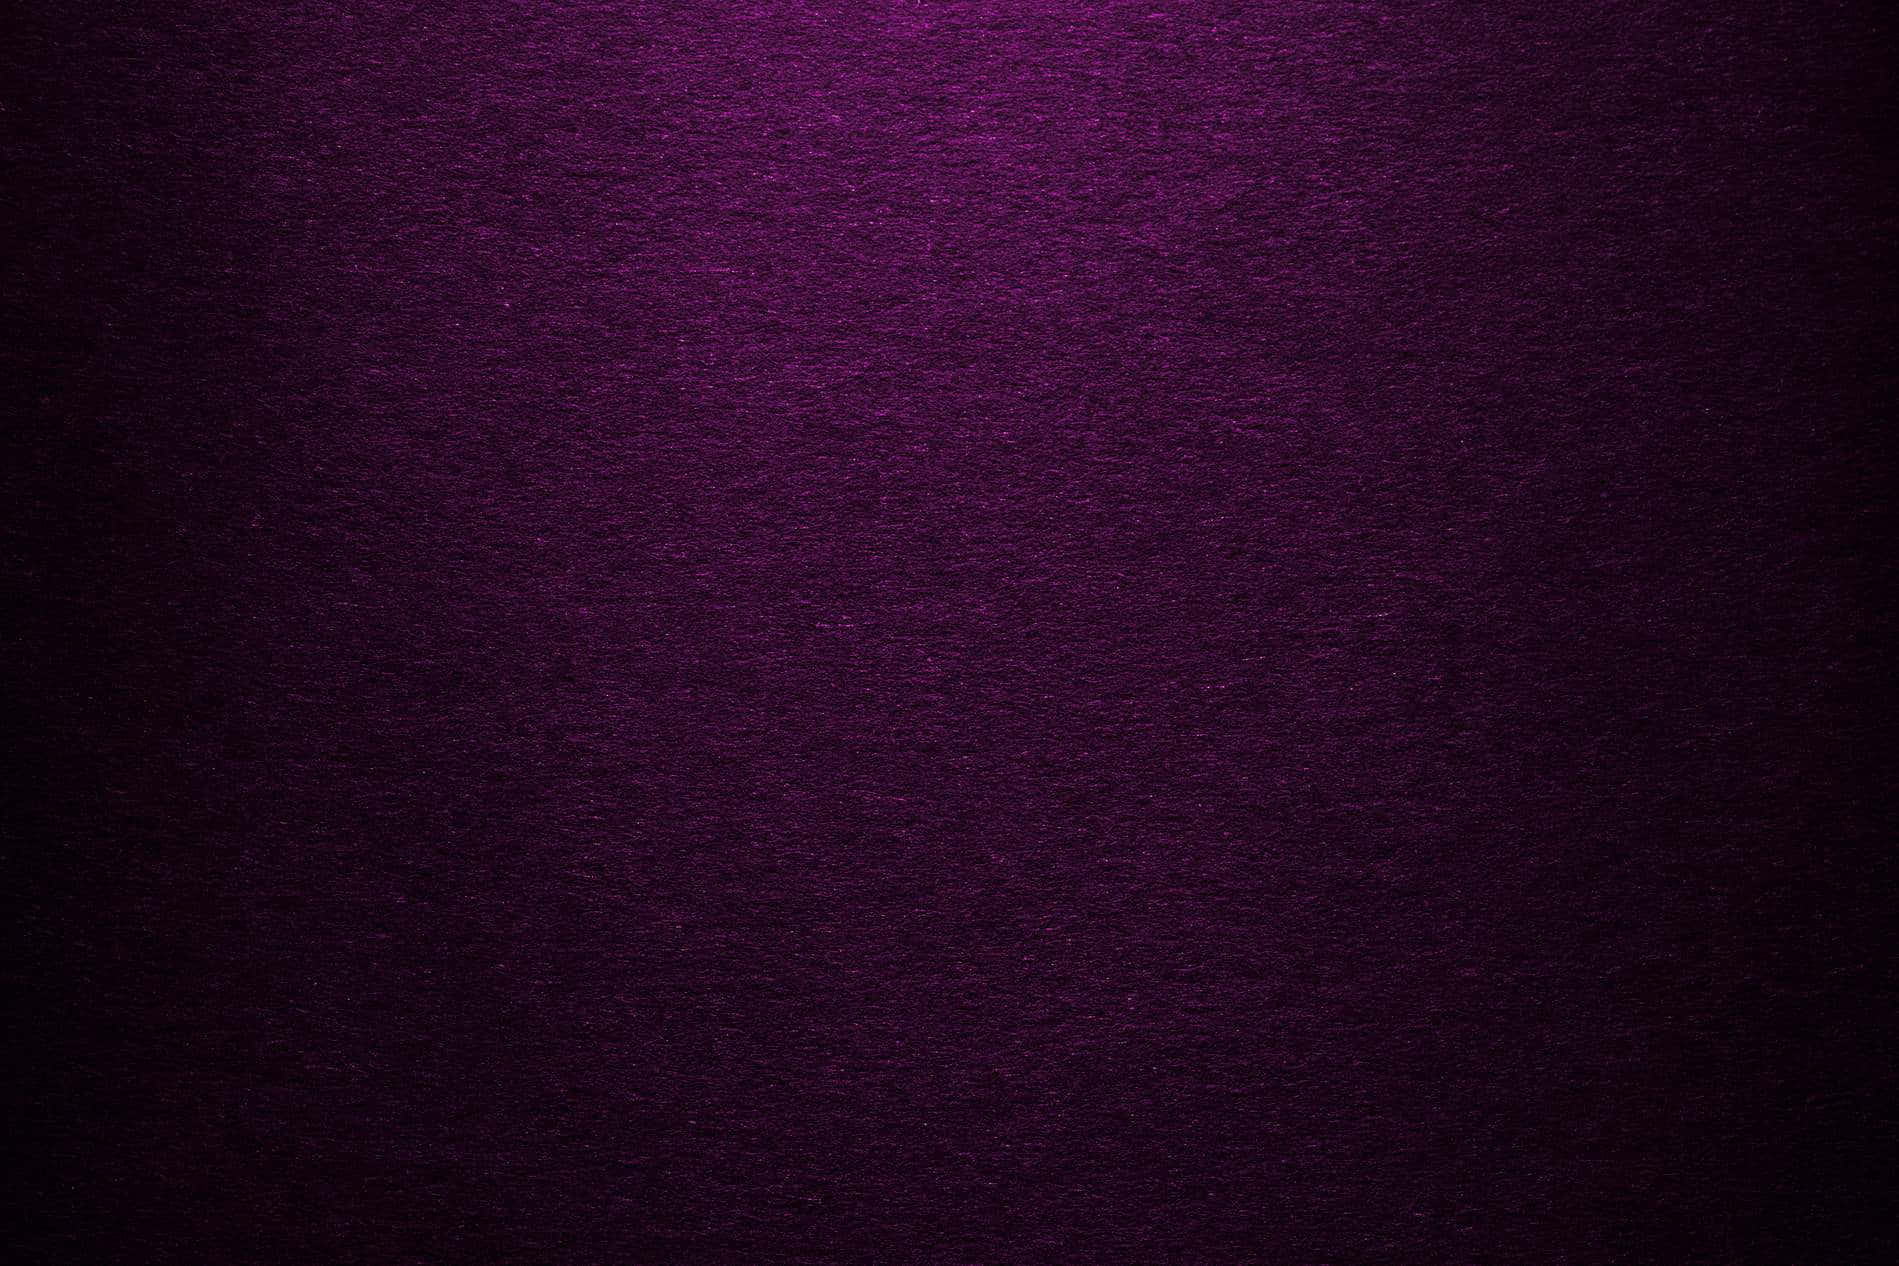 Purple Velvet Background With A Light